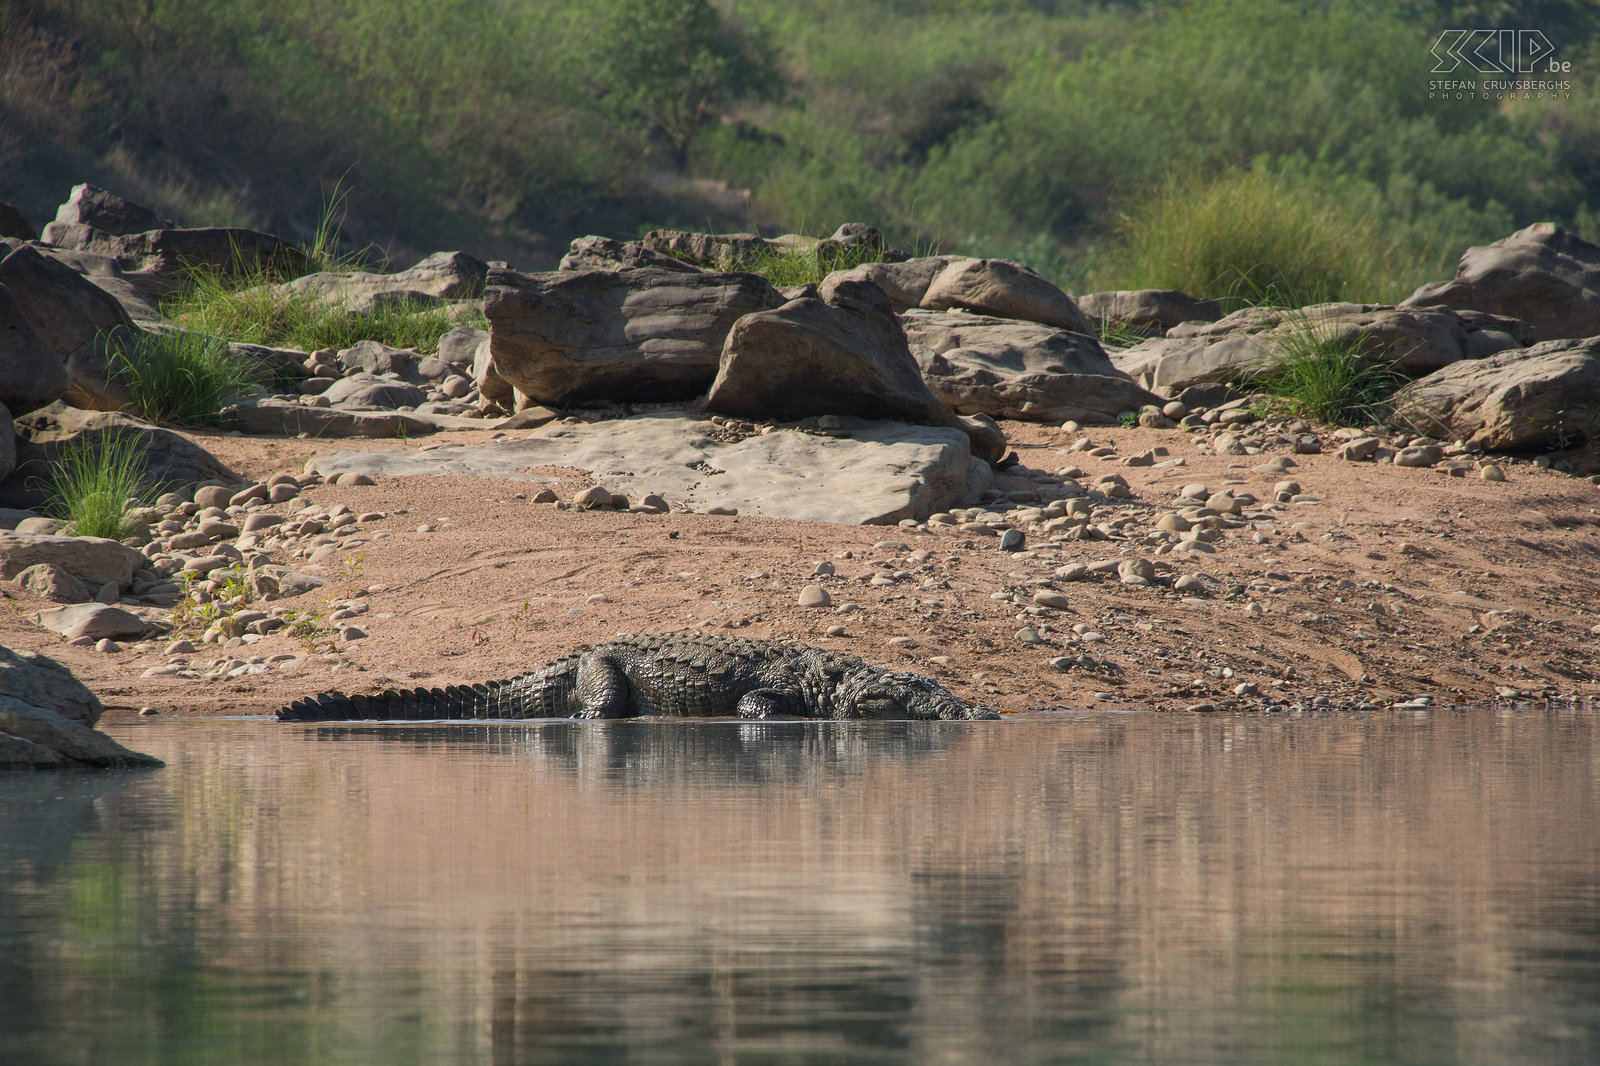 Panna - Crocodile A crocodile in the Ken river in Panna national park. Stefan Cruysberghs